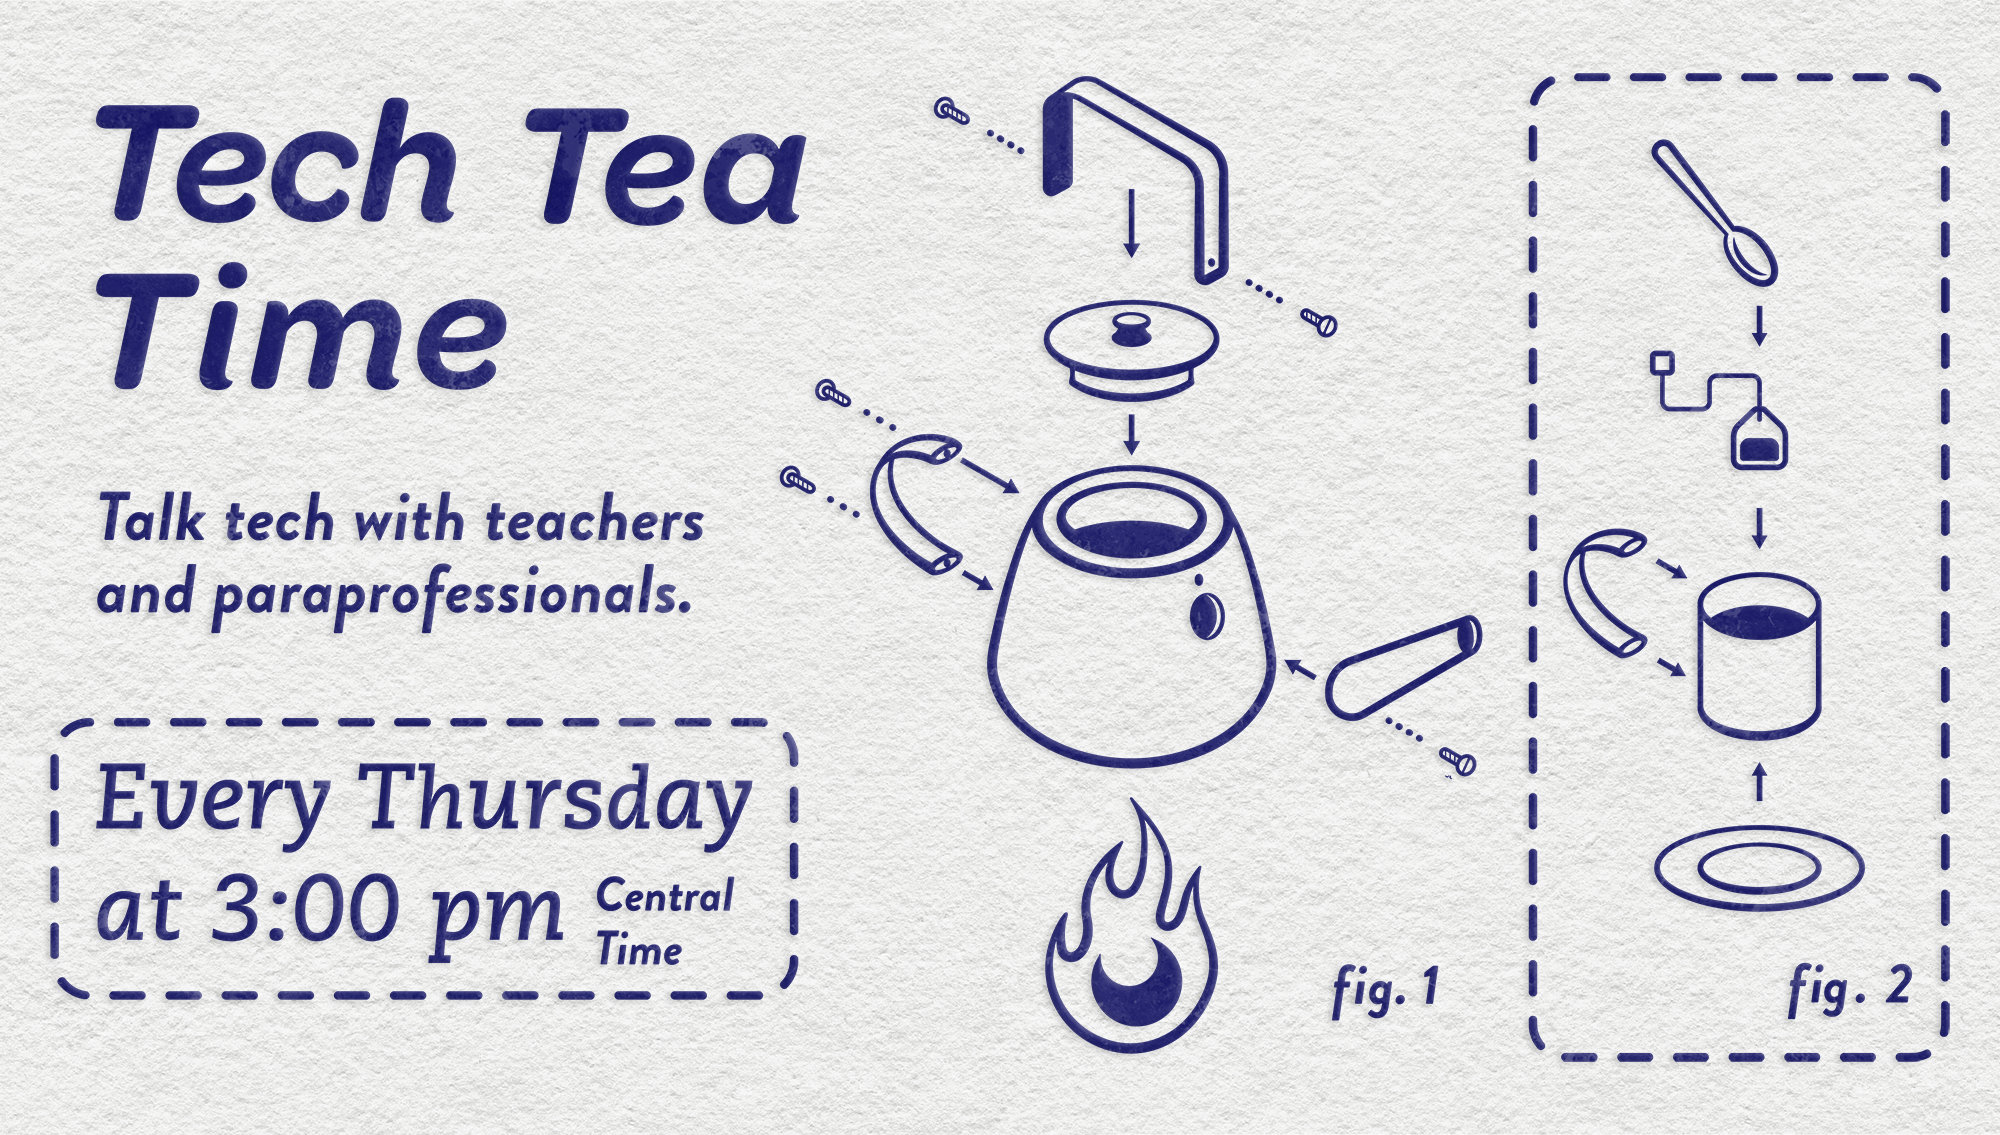 tech-tea-time-banner-technical-drawing-blueprint.png